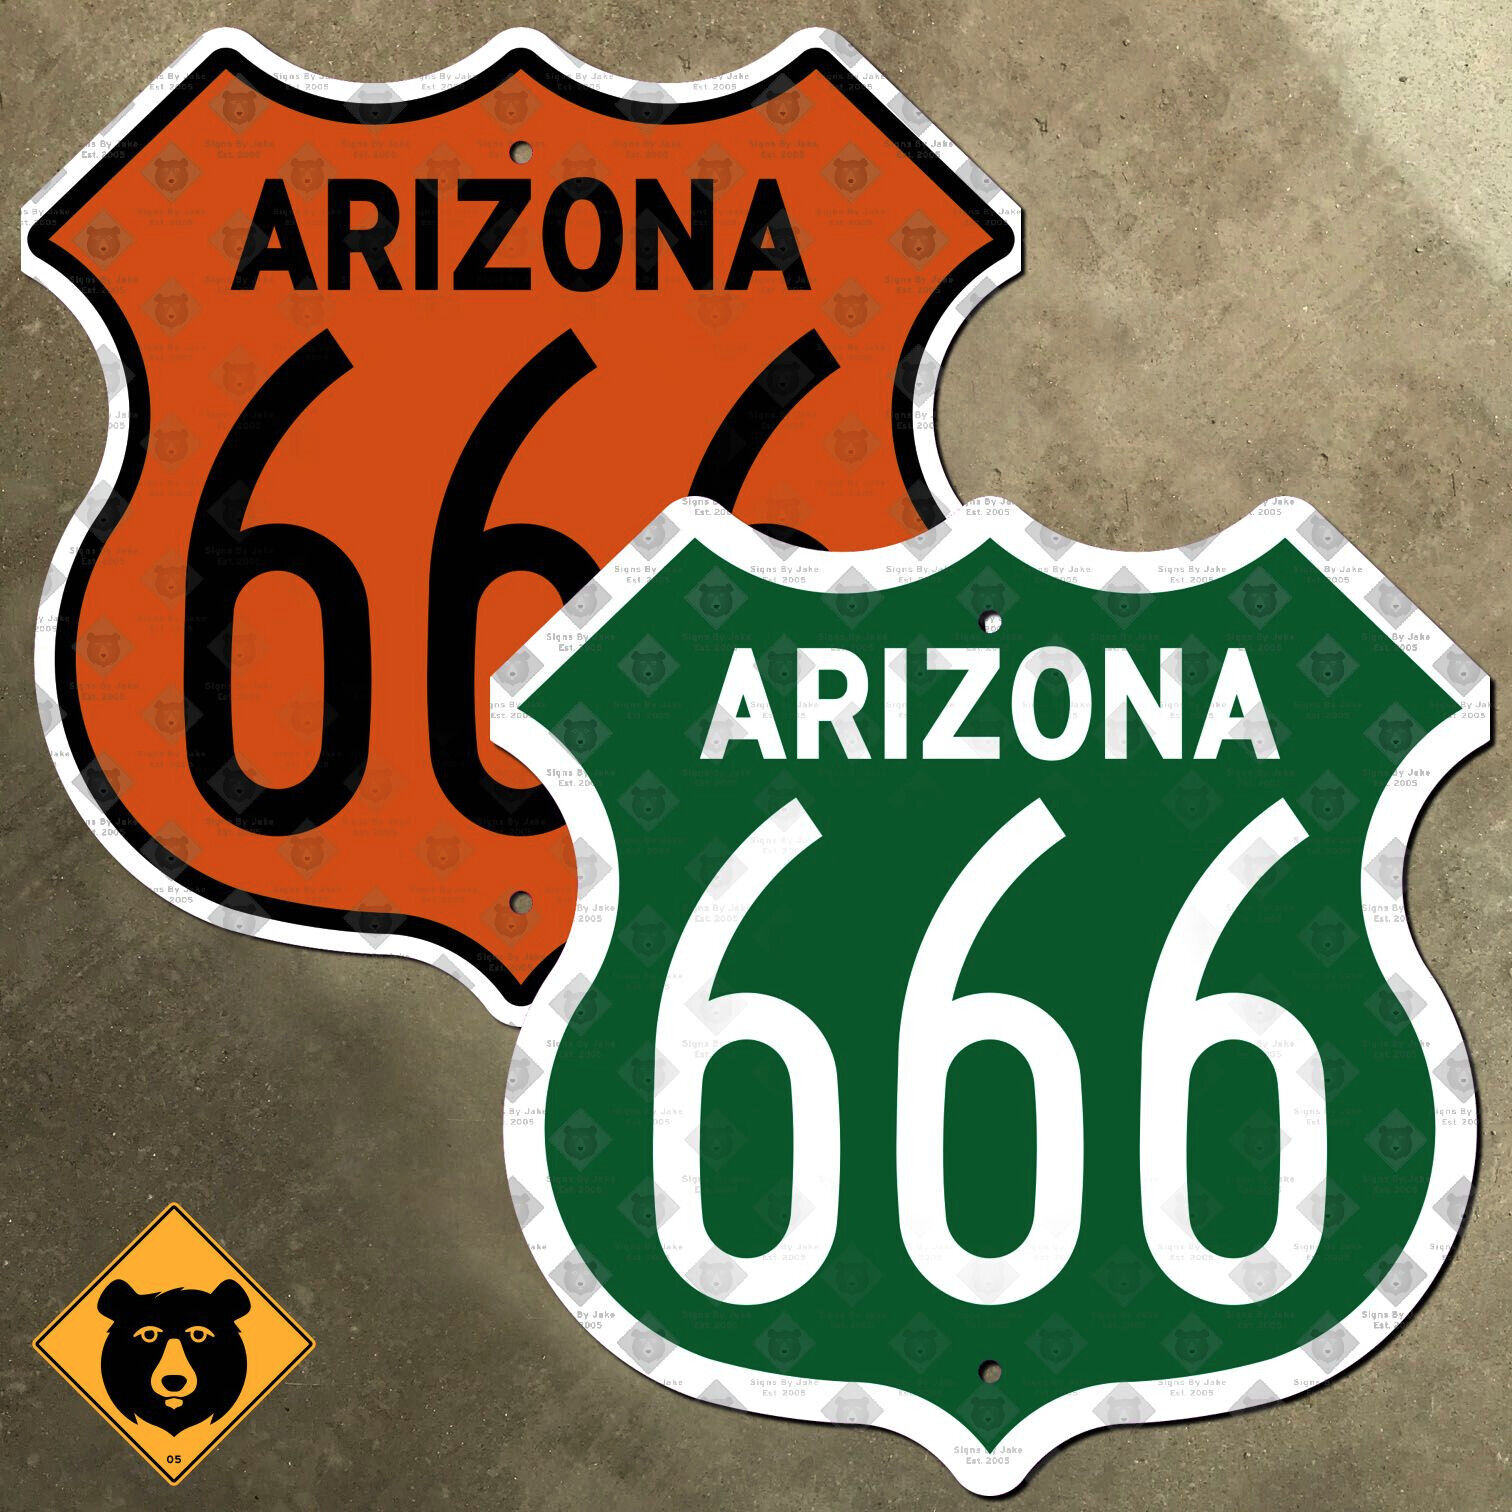 Arizona US route 666 devil's highway marker road sign orange green 1960 16x16